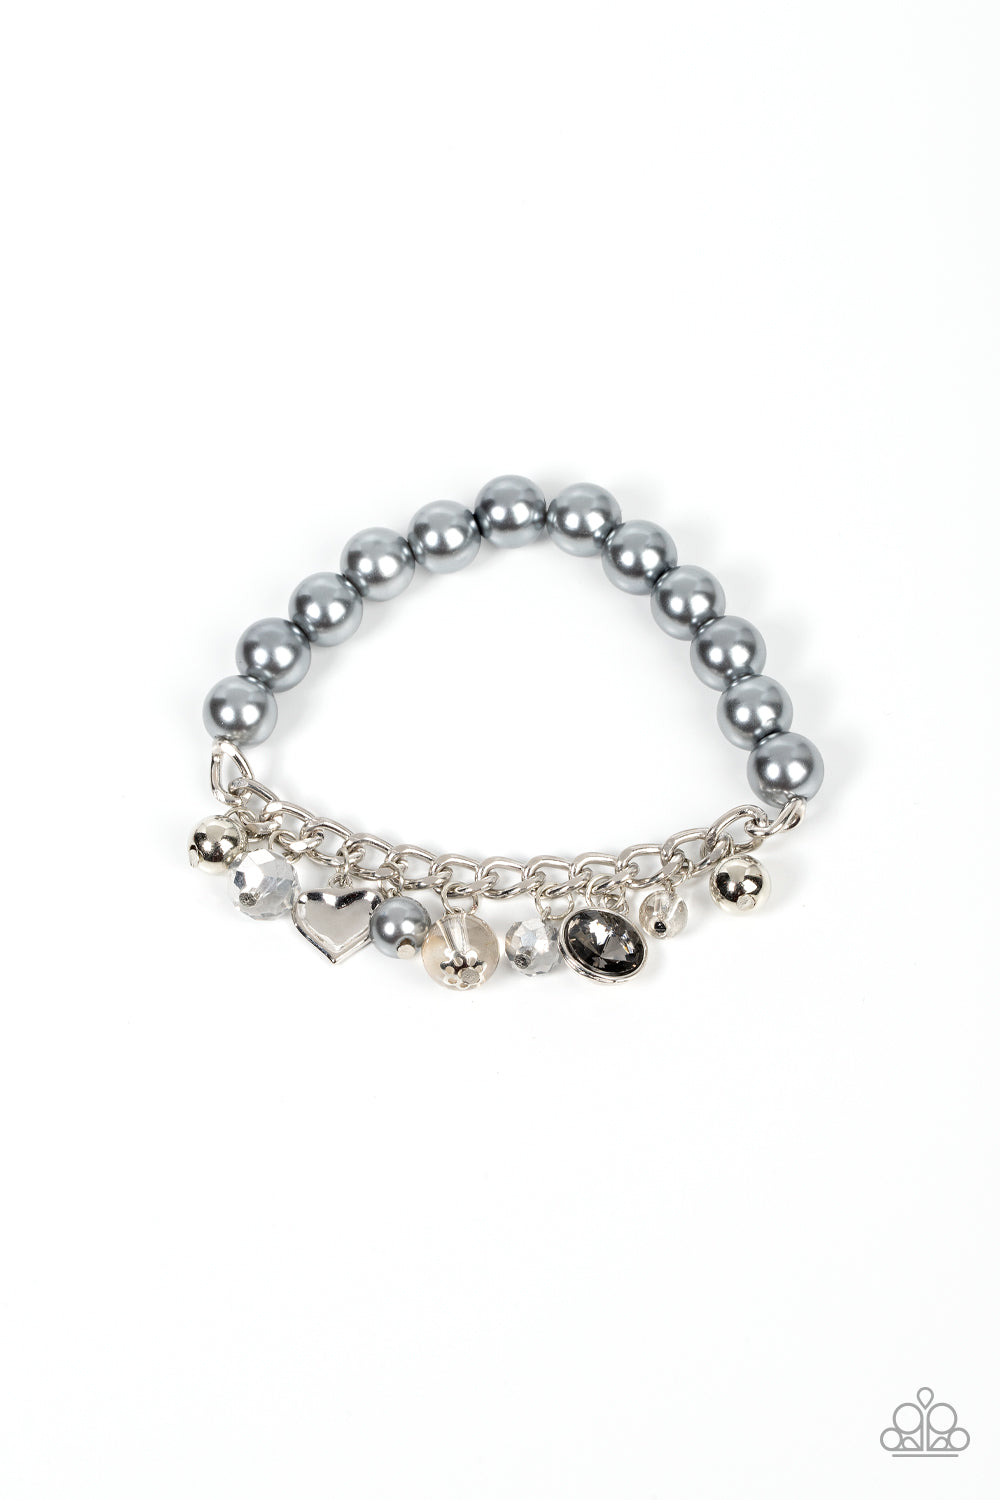 Adorningly Admirable - Silver Bracelet